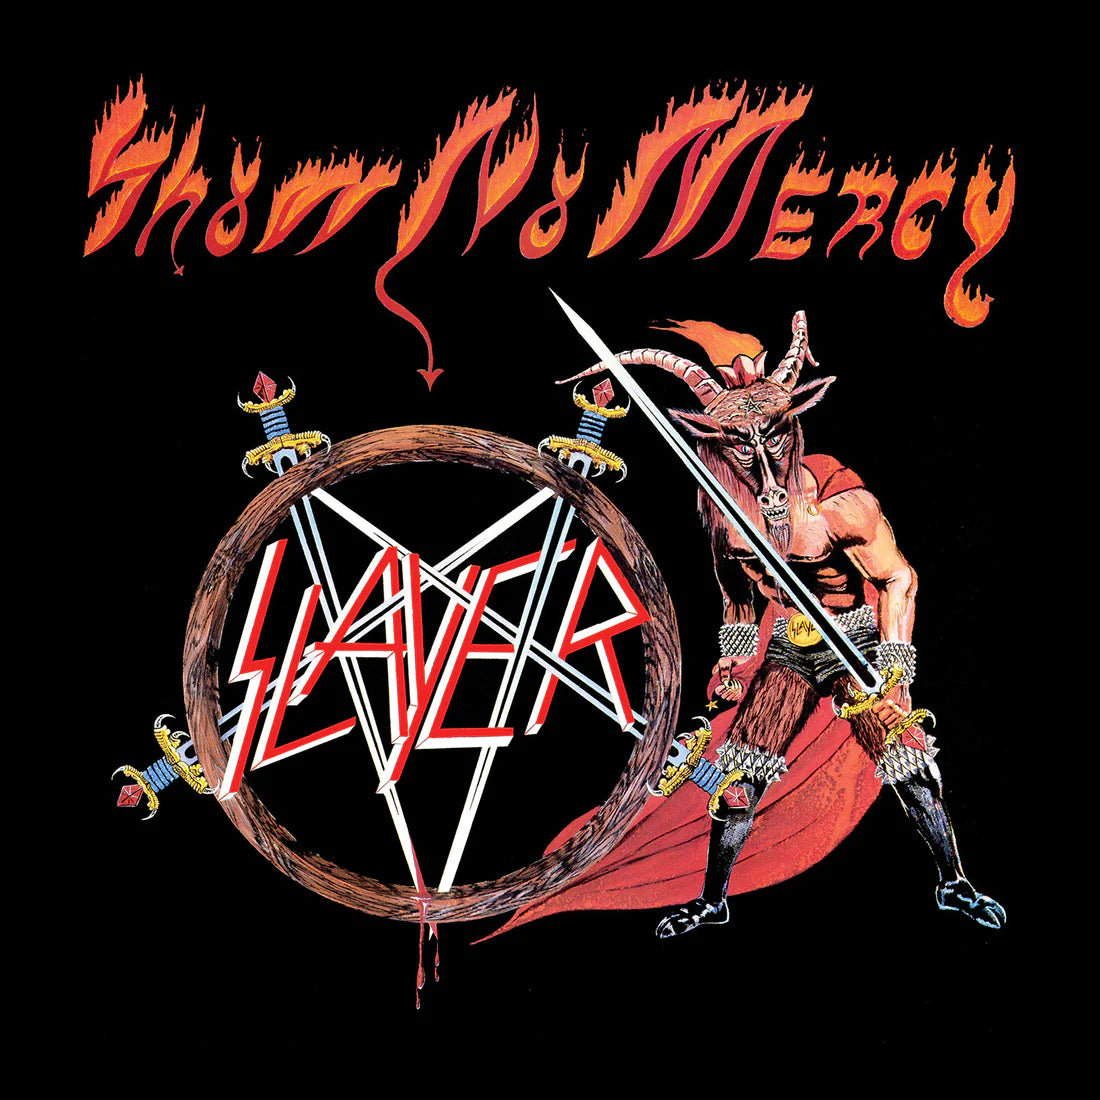 Slayer - Show No Mercy LP